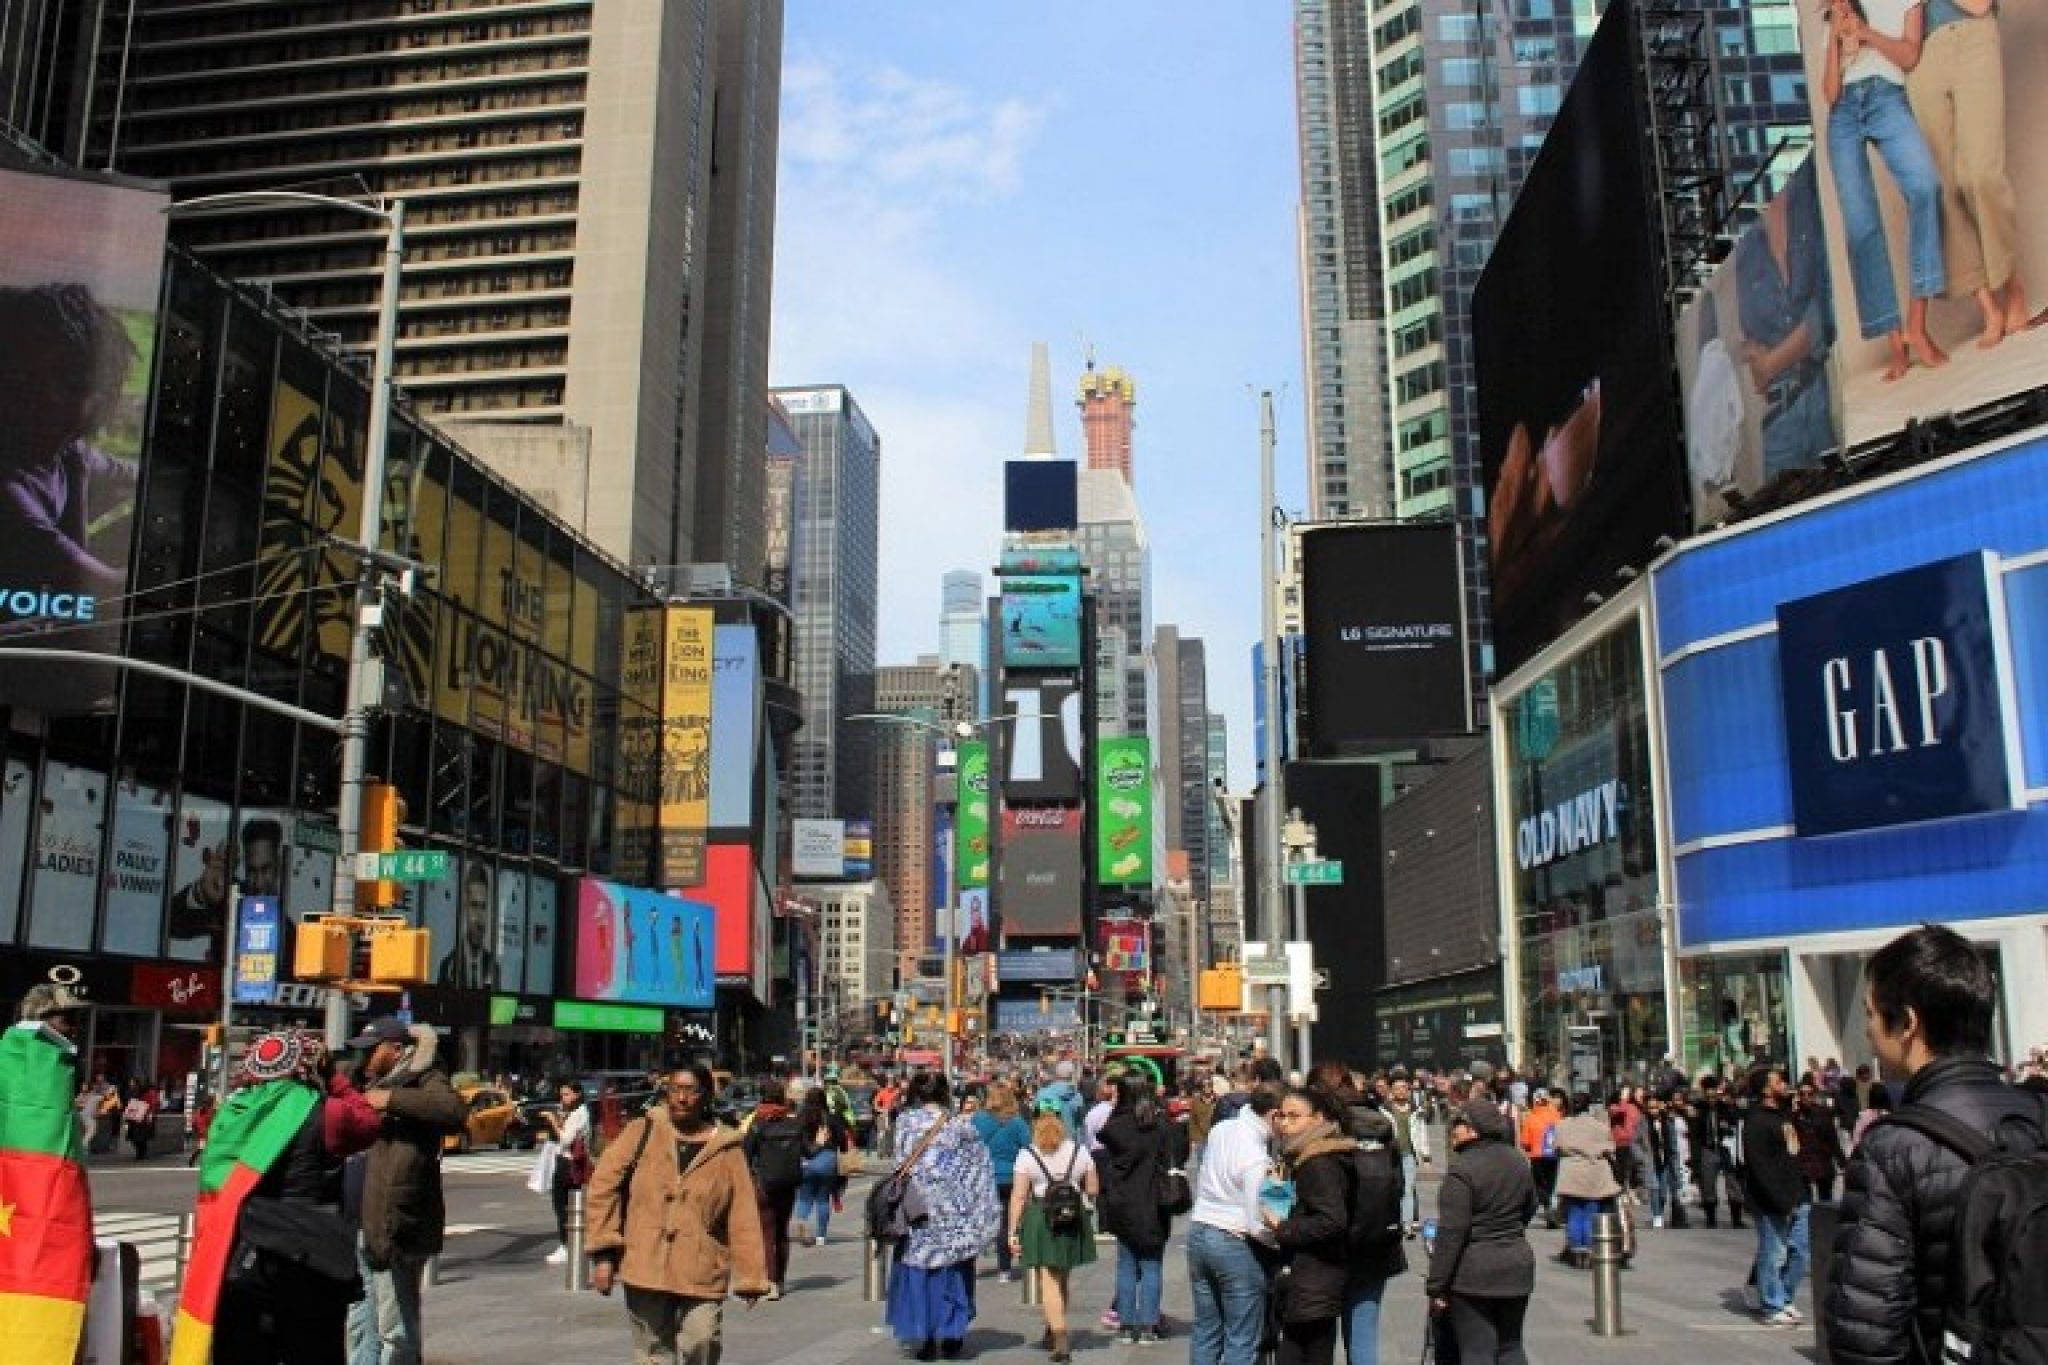 New York City's population grew to 8.8 million according to the latest